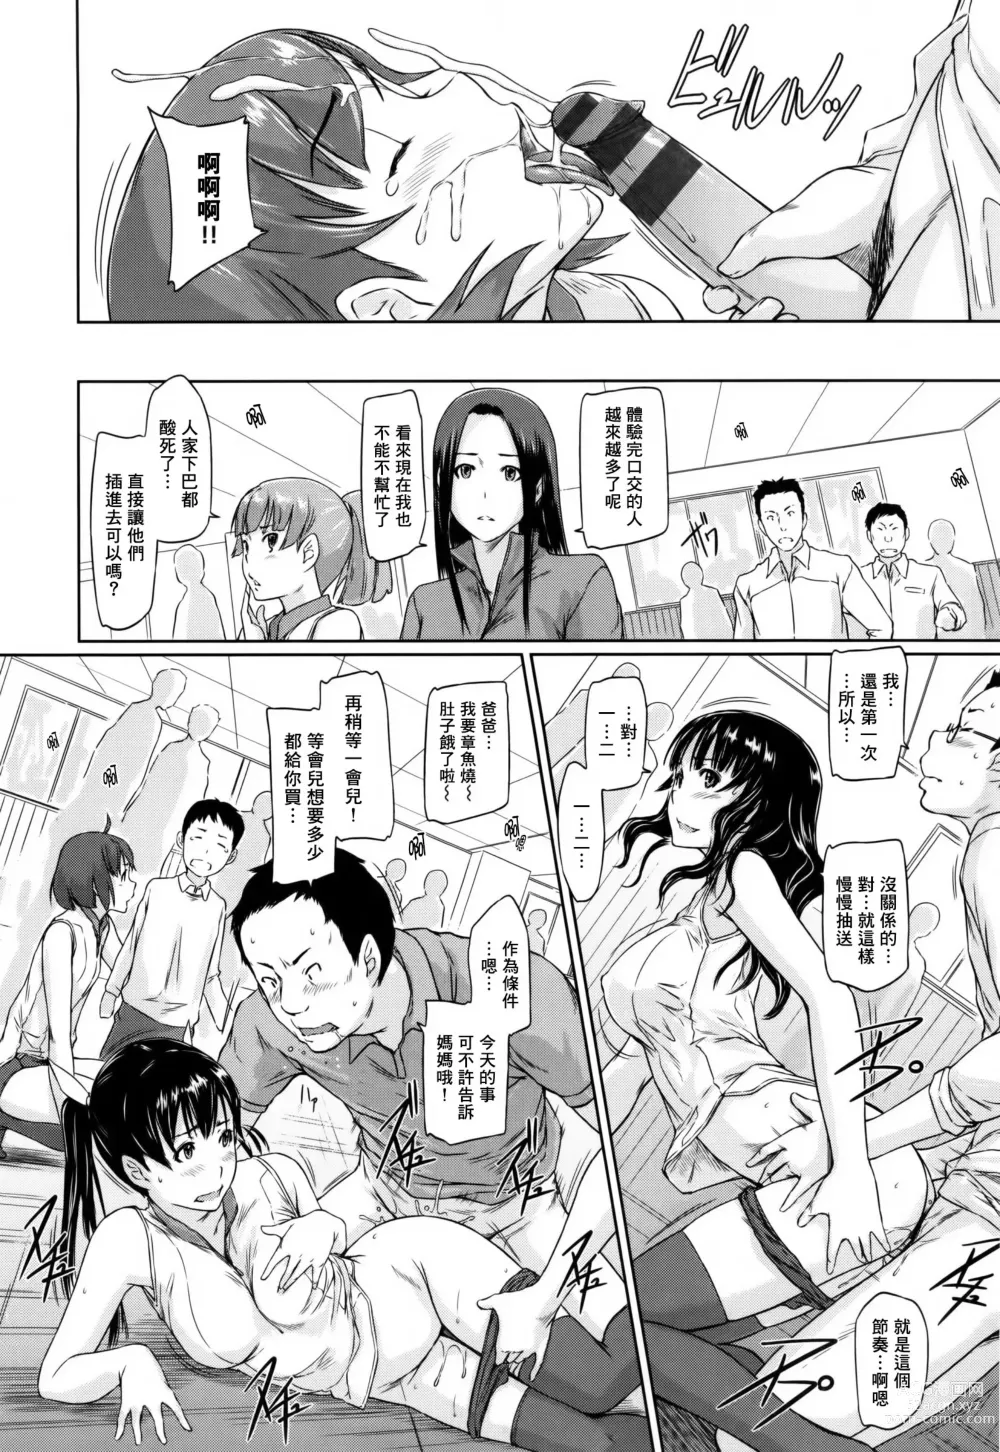 Page 204 of manga Suki ni Nattara Icchokusen!